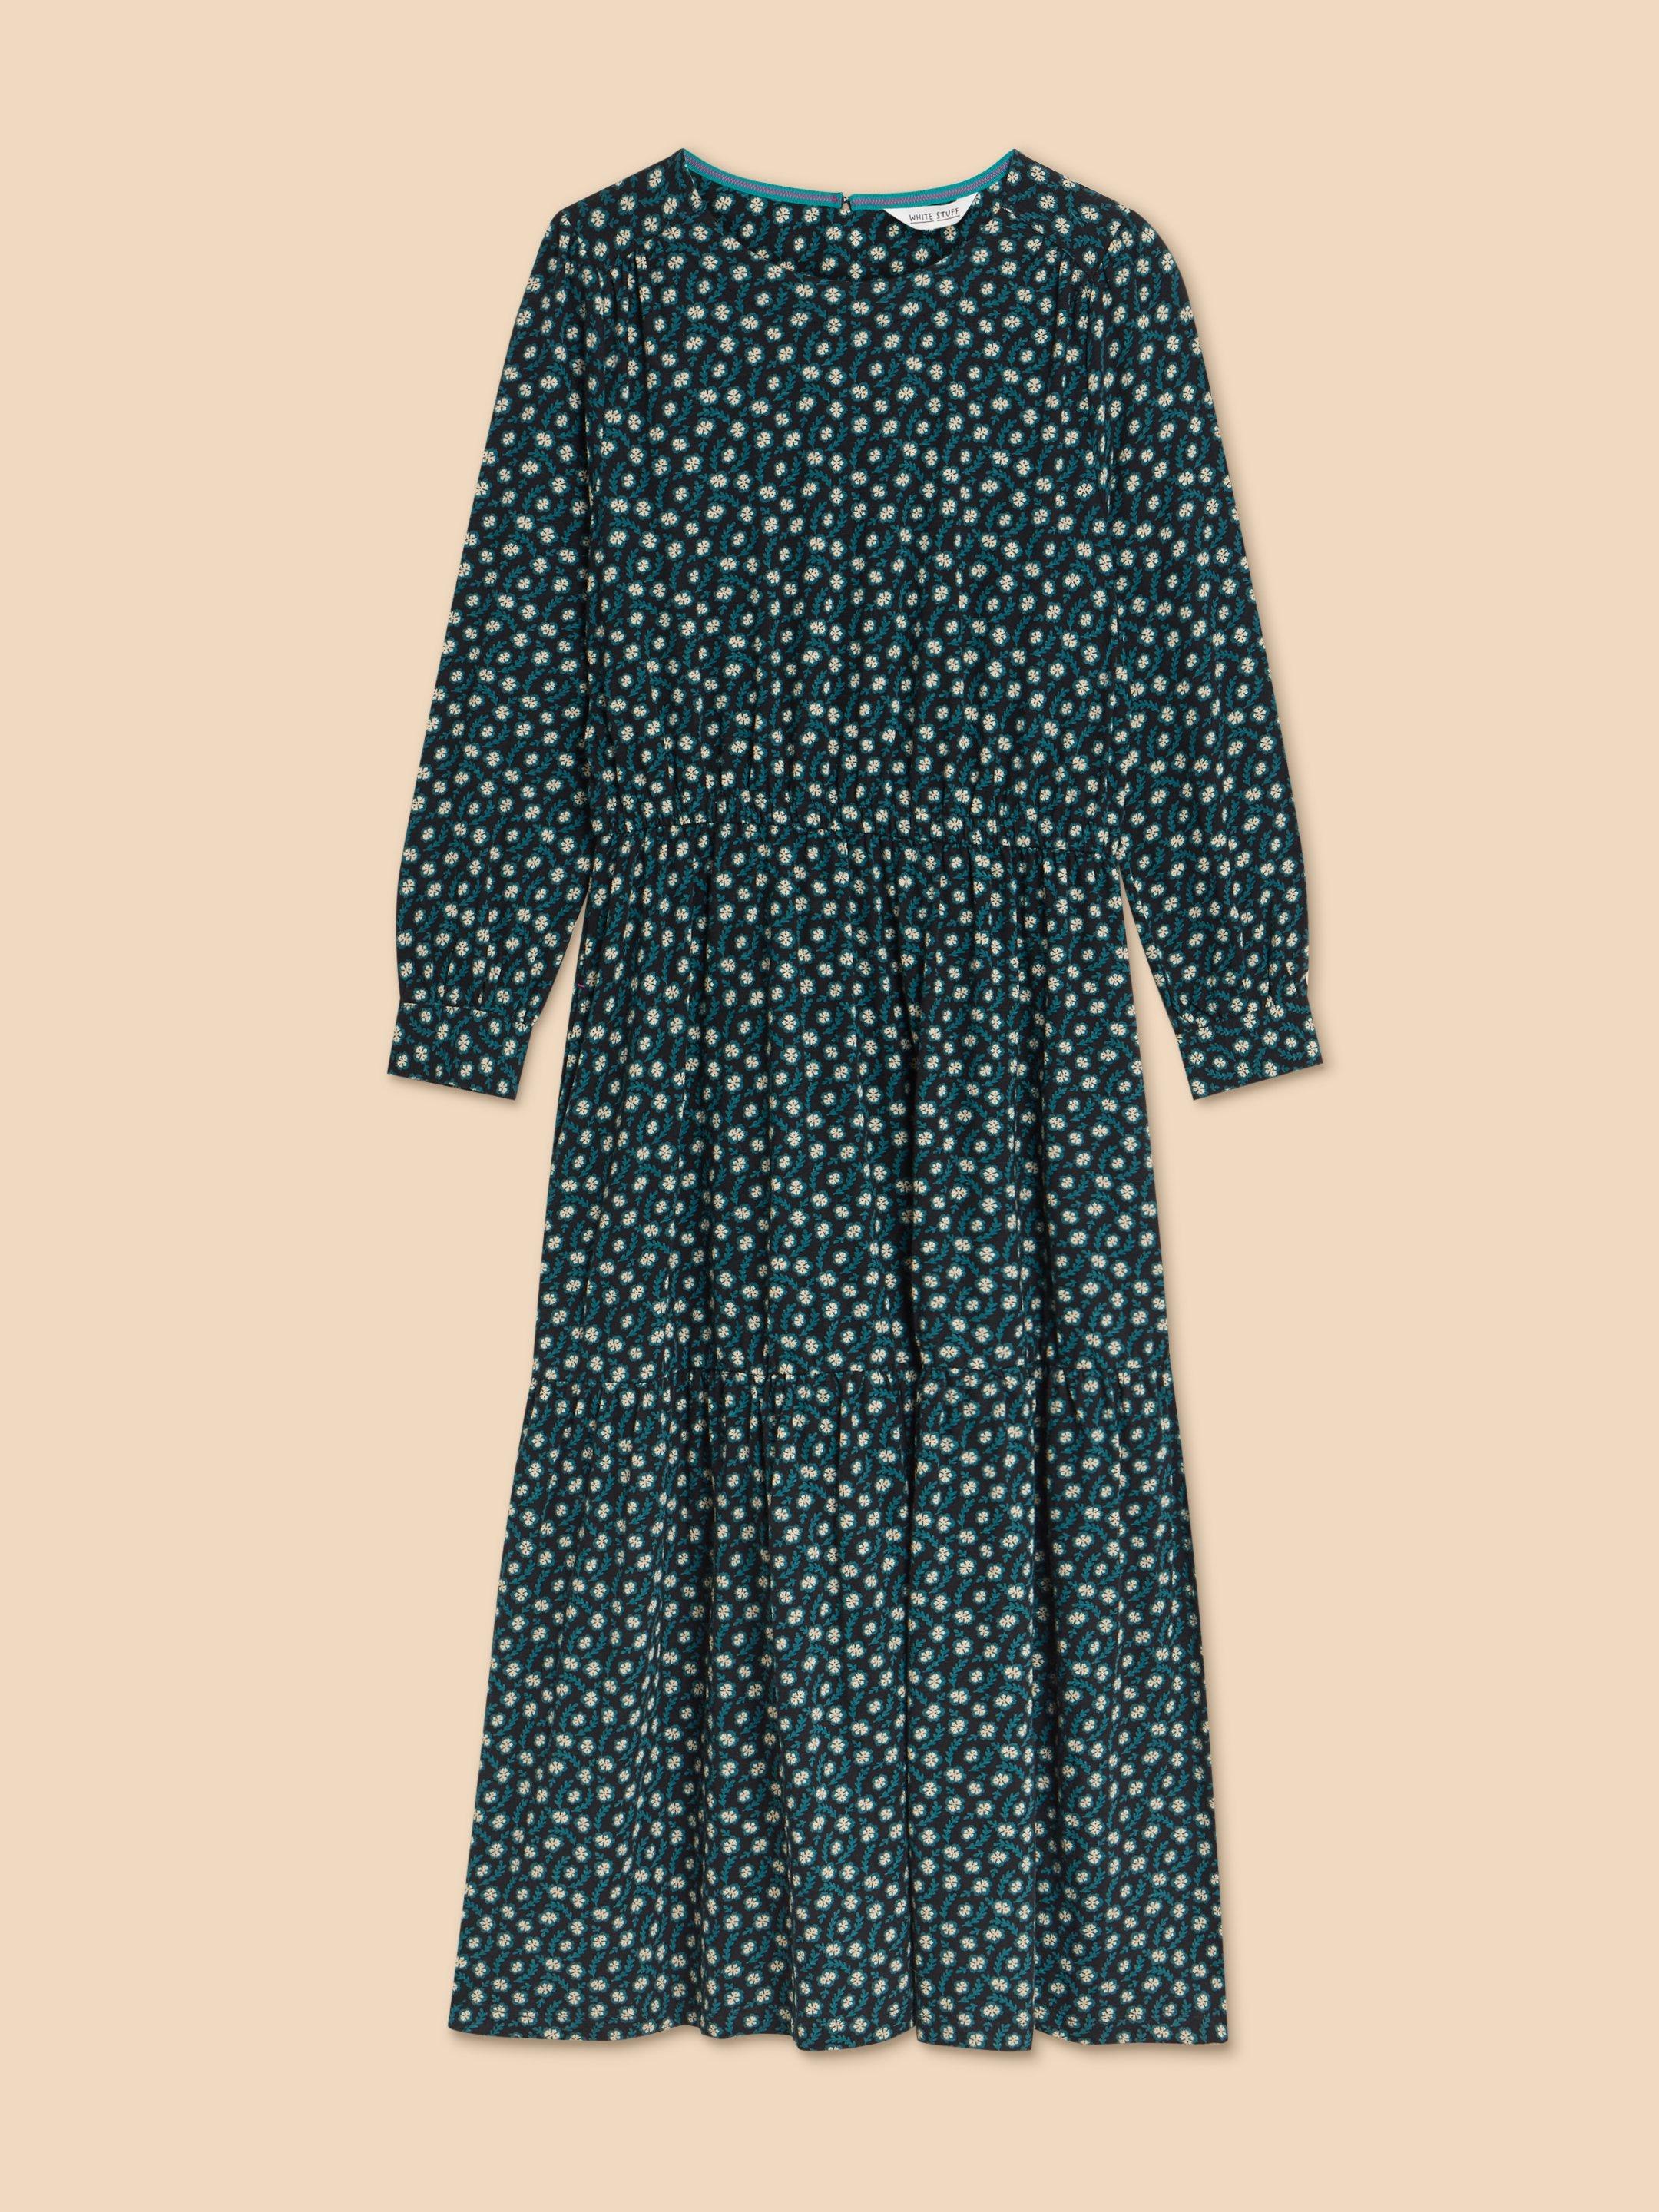 Olive Jersey Dress in BLK PR - FLAT FRONT